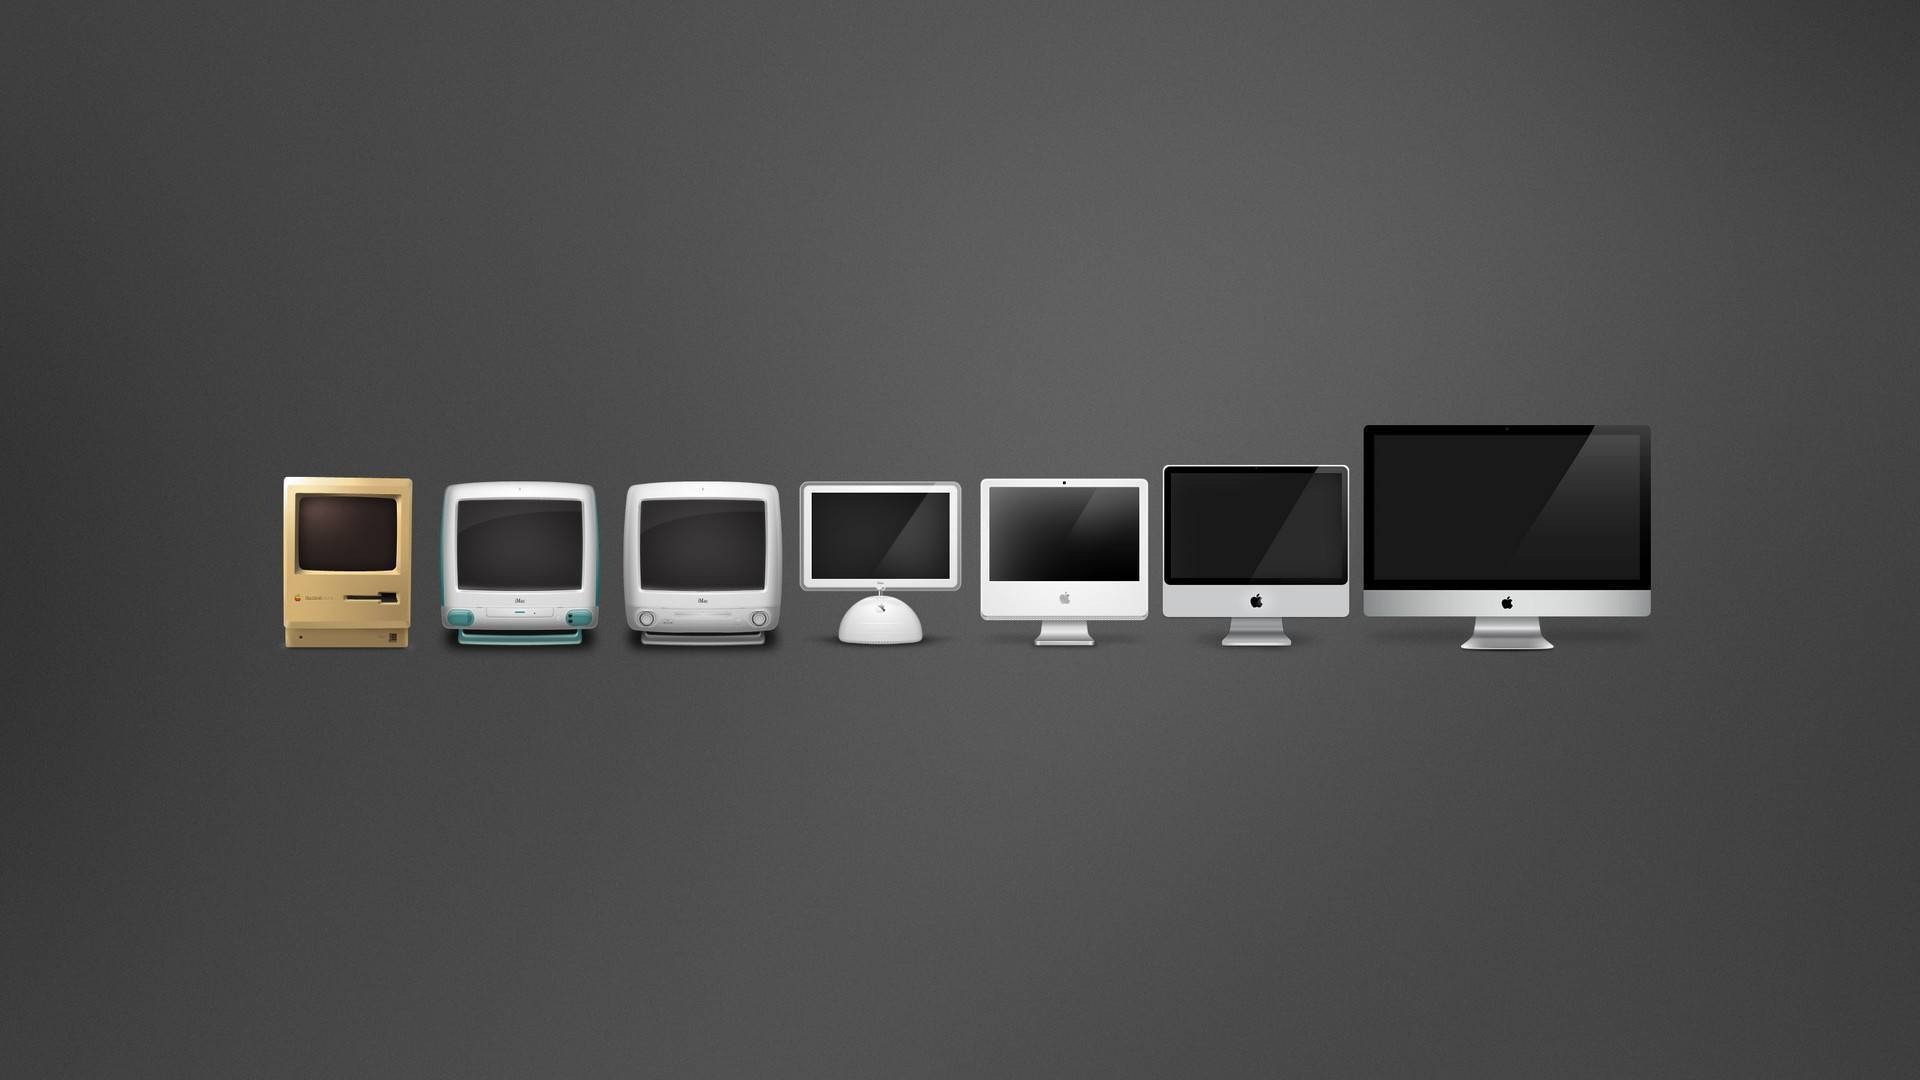 1920x1080 Evolution of the Mac